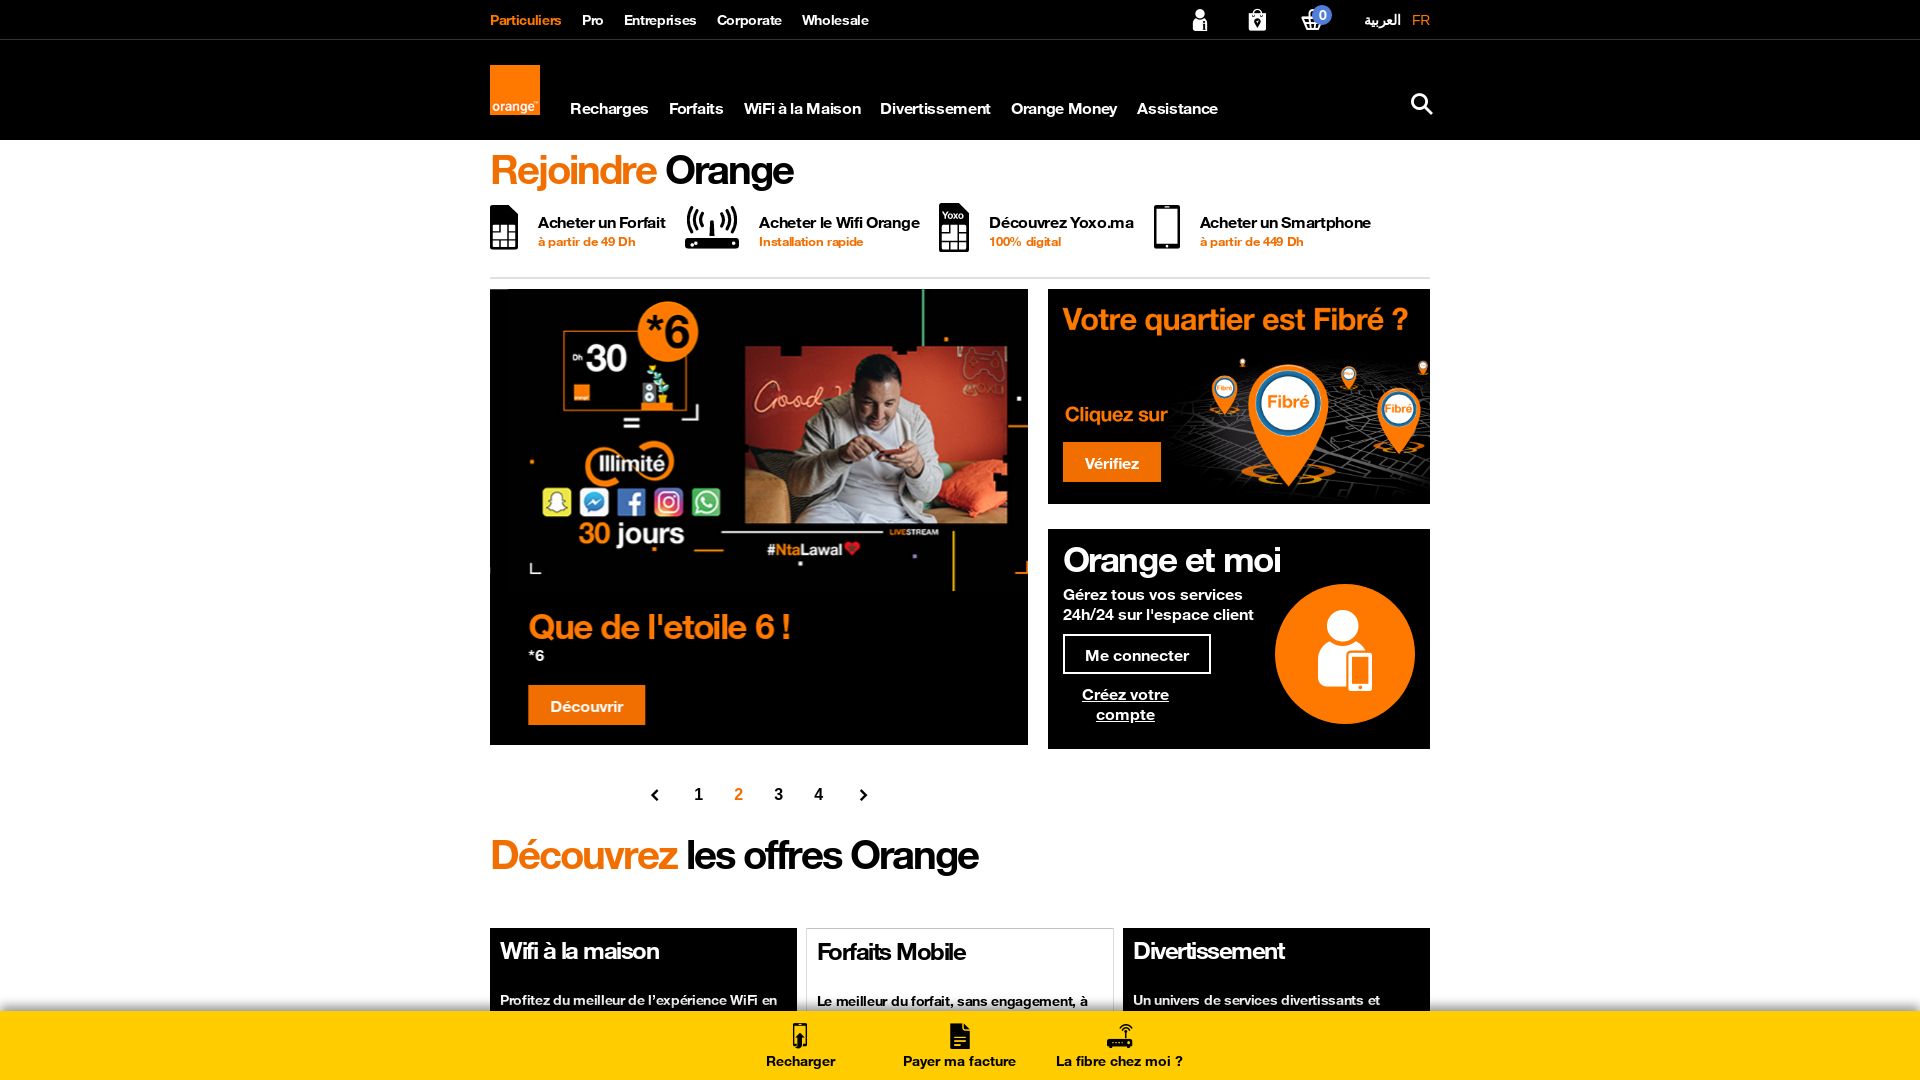 Website status config.orange.ma is   ONLINE